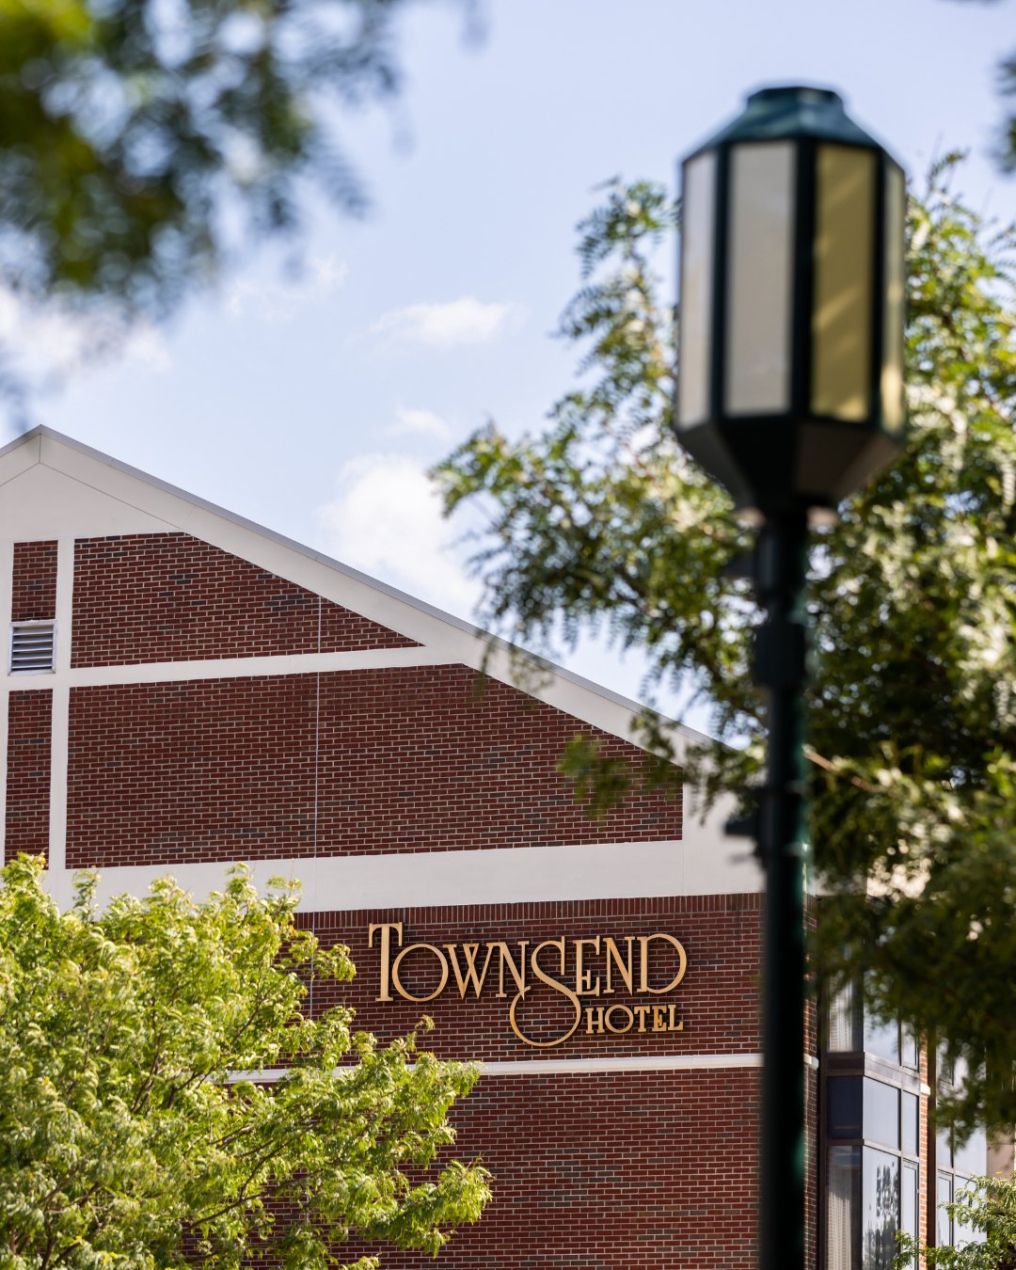 The Townsend Hotel Venue photo